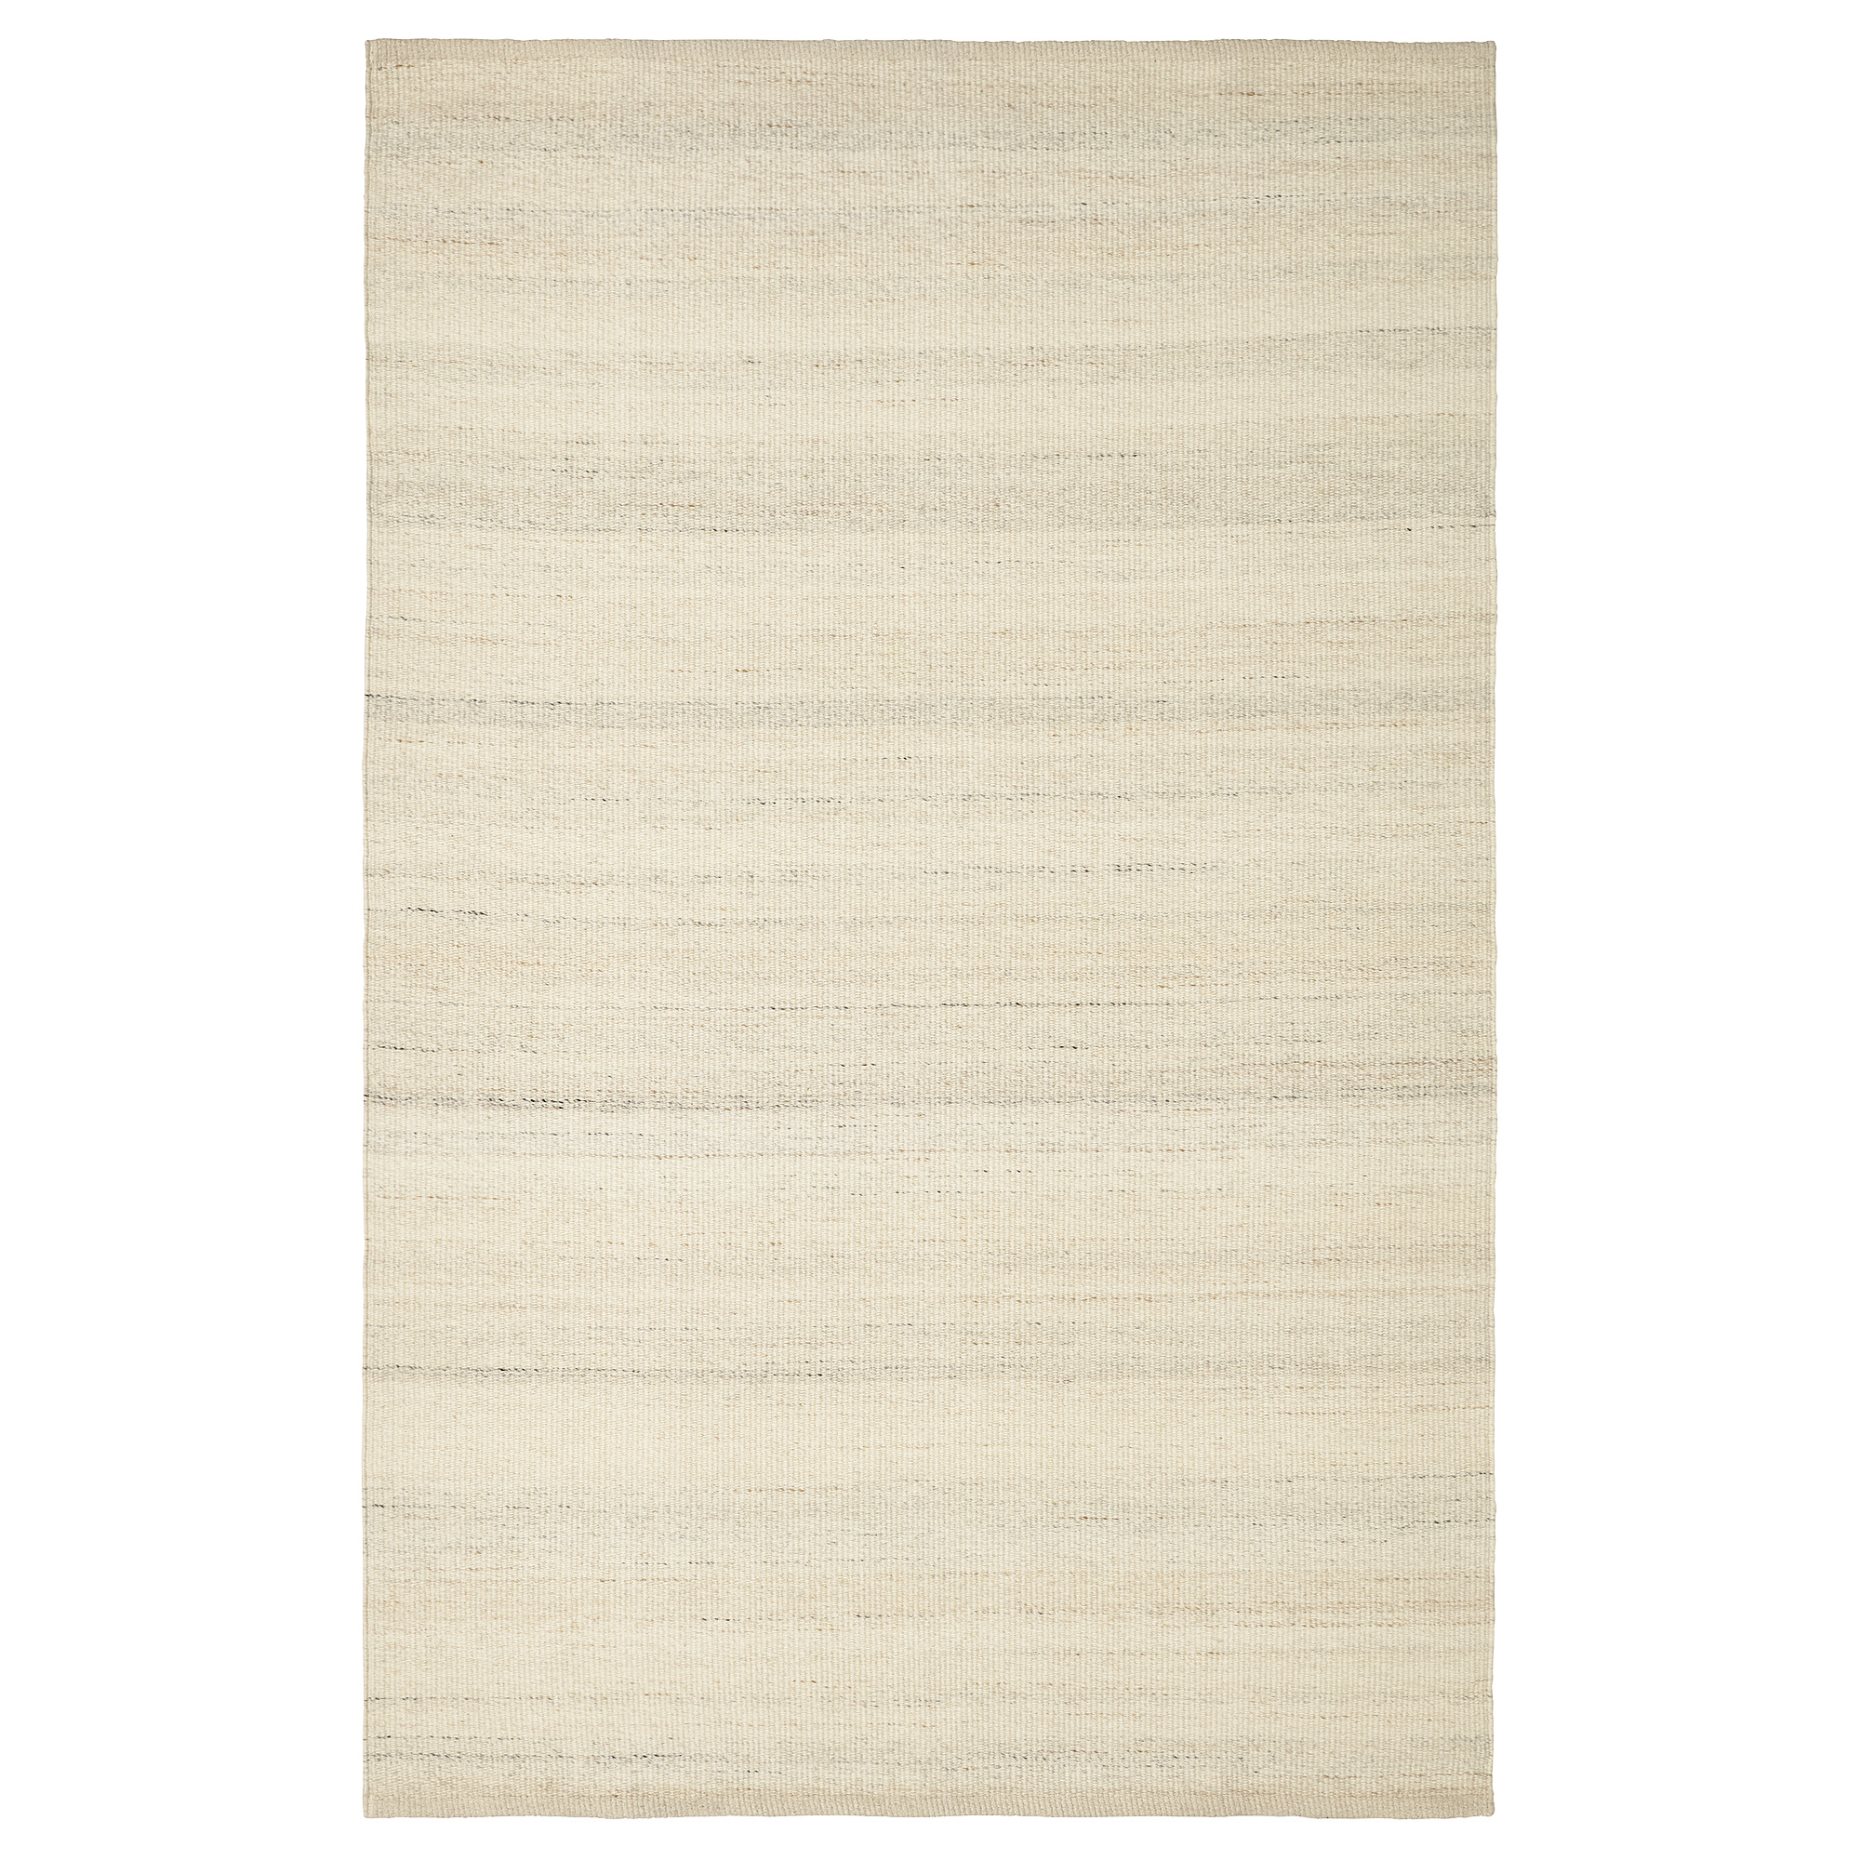 TIDTABELL, rug flatwoven, 170x240 cm, 305.552.82